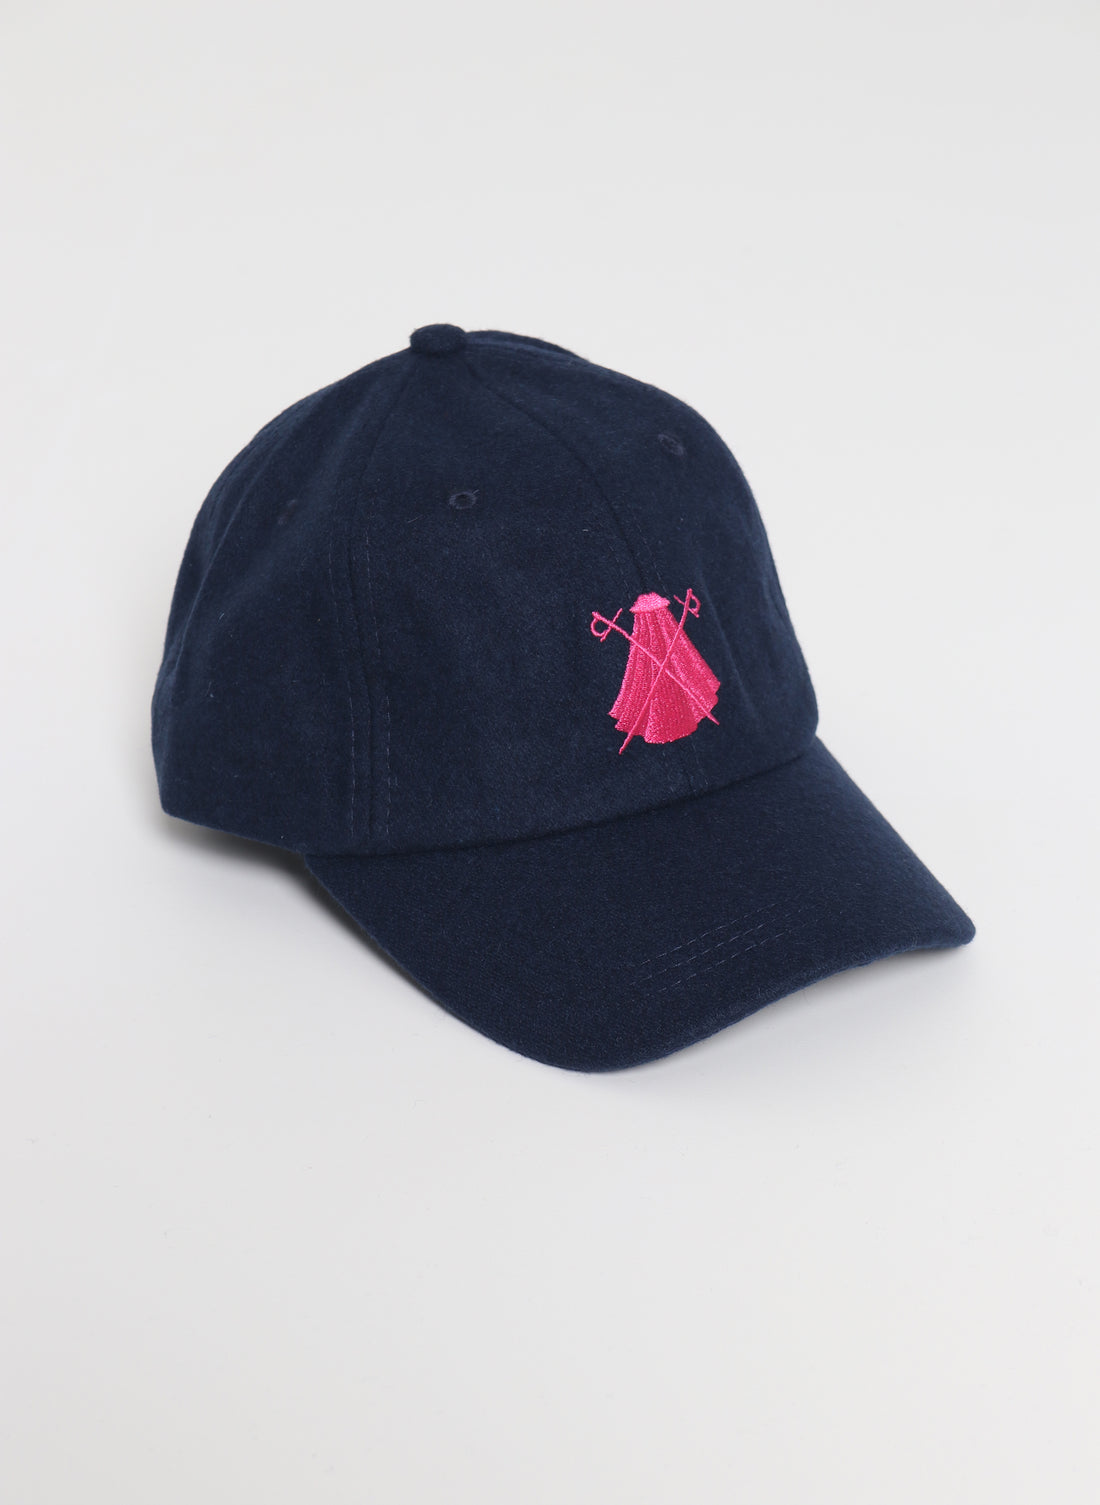 Marineblauwe wollen muts met roze logo Capote